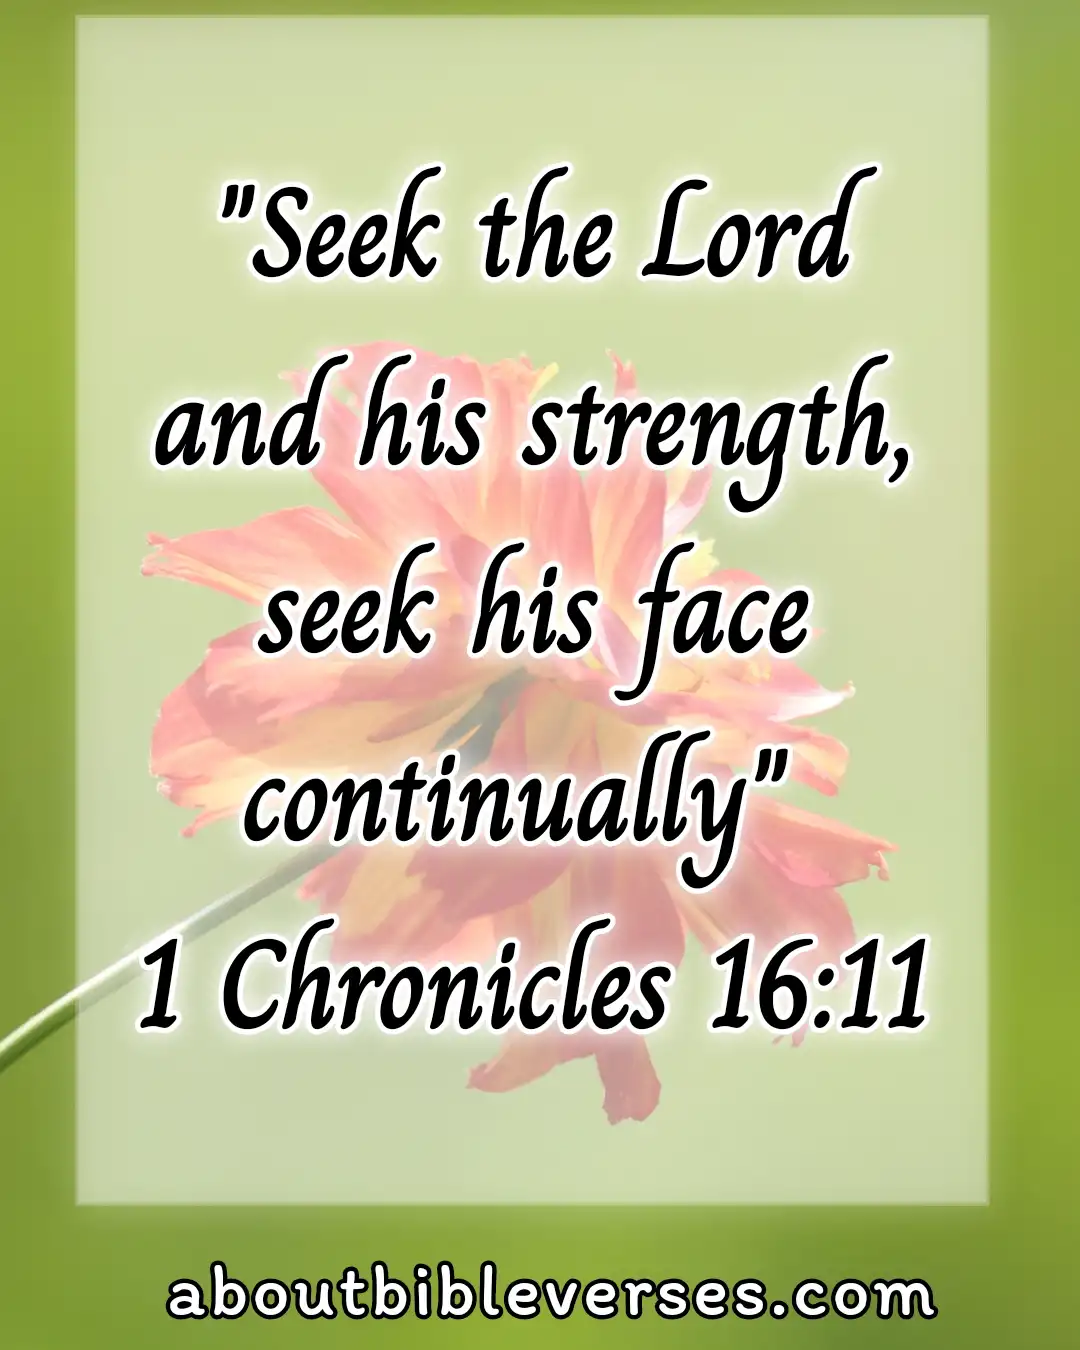 Good morning bible verses (1 Chronicles 16:11)